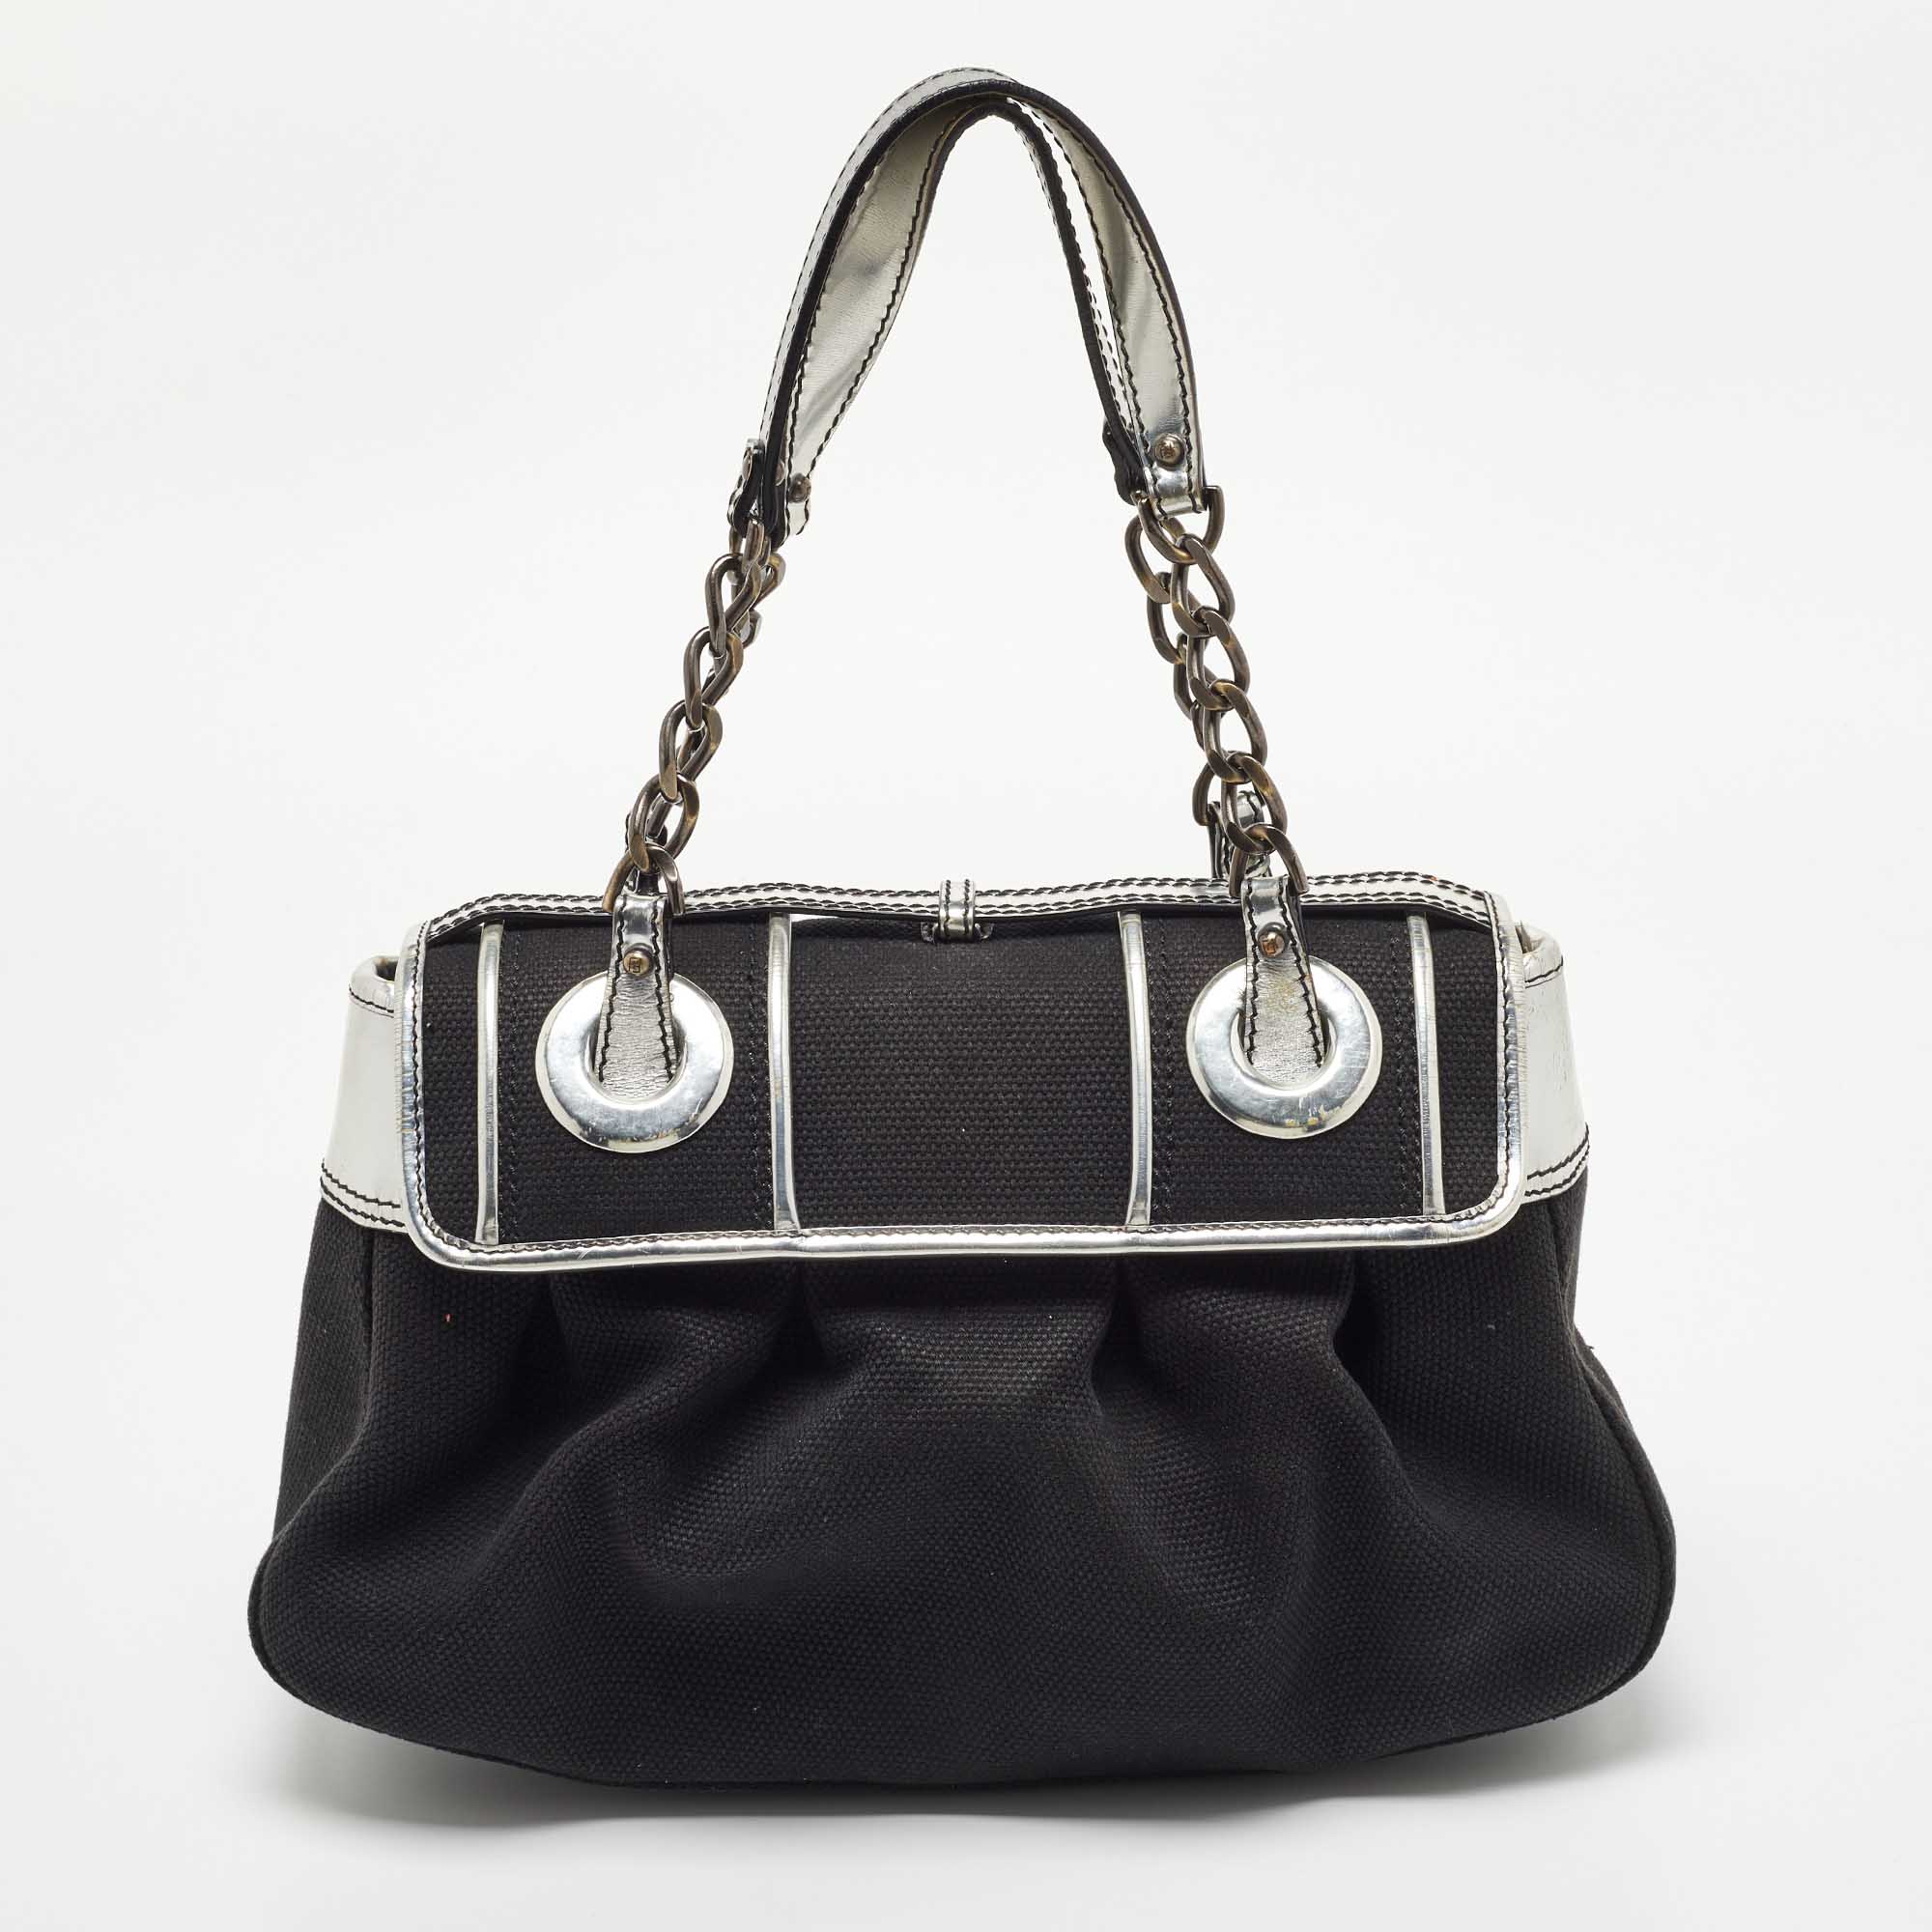 Fendi Black/Silver Canvas And Patent Leather B Shoulder Bag